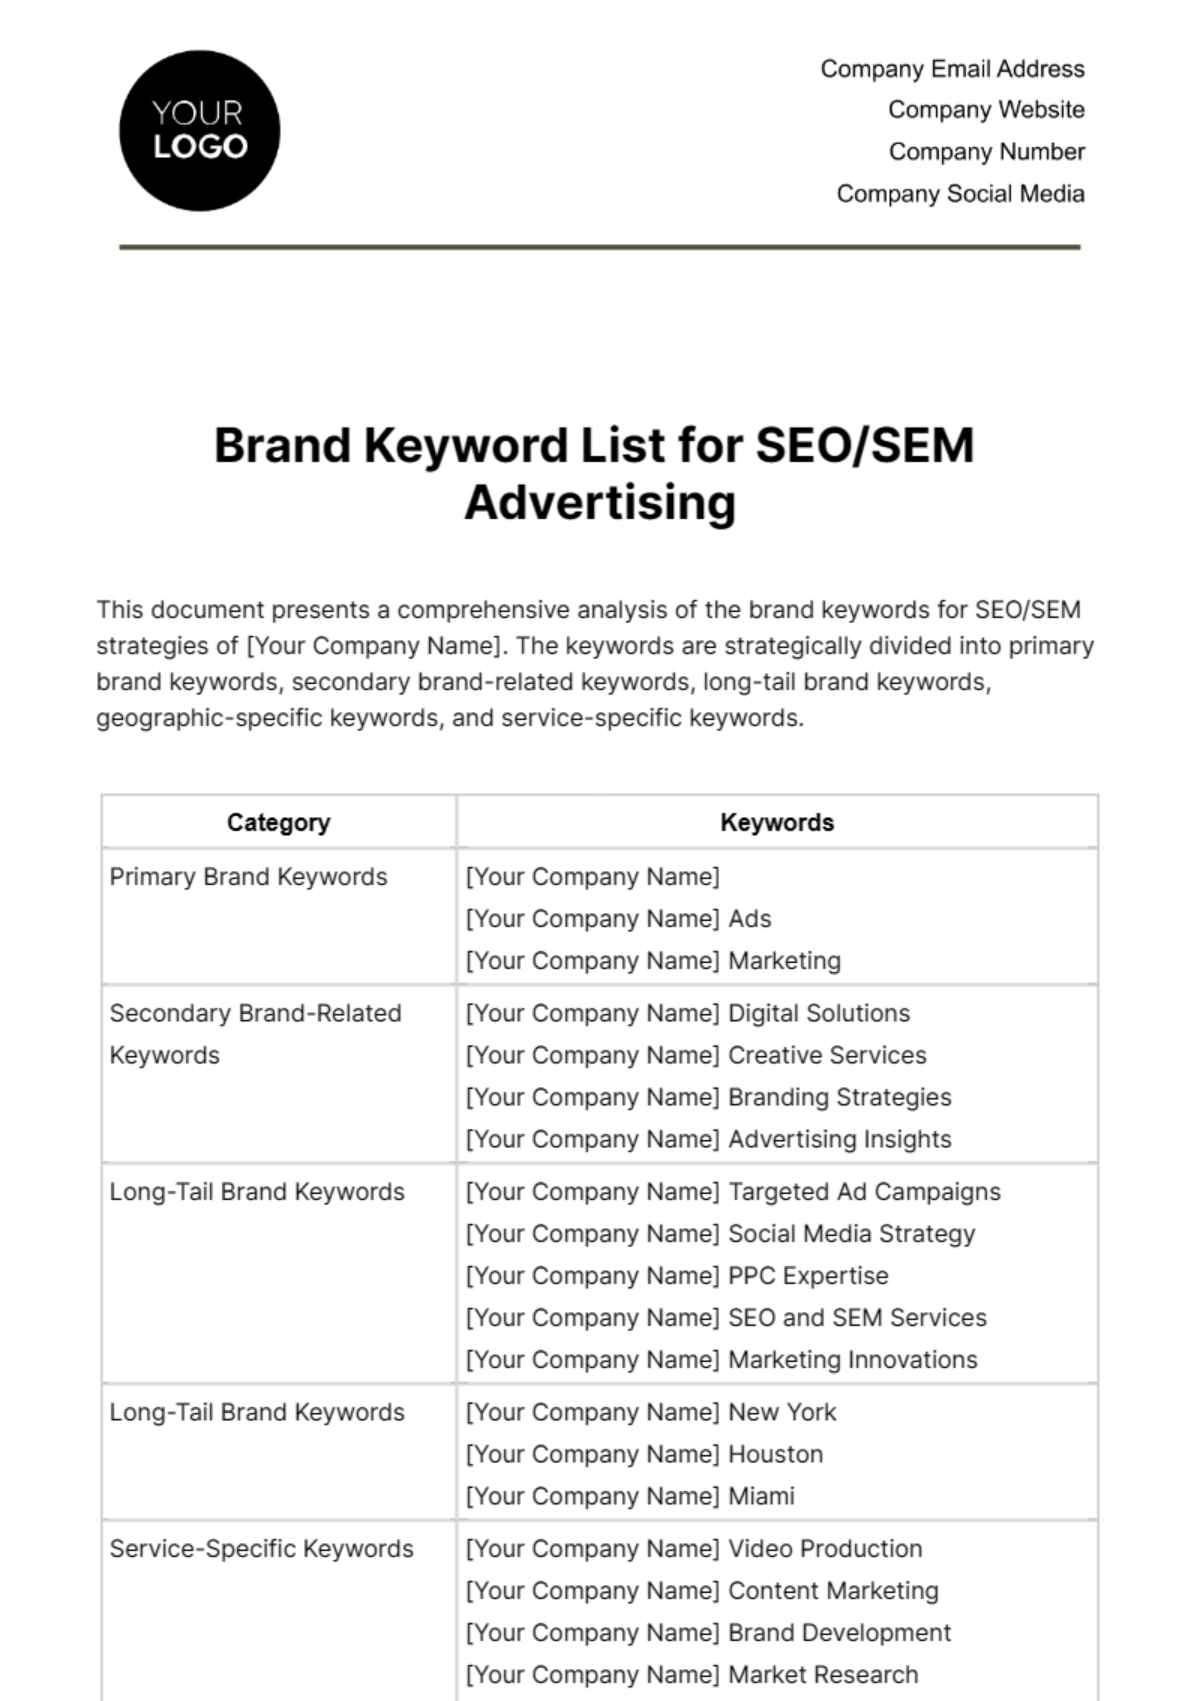 Free Brand Keyword List for SEO/SEM Advertising Template